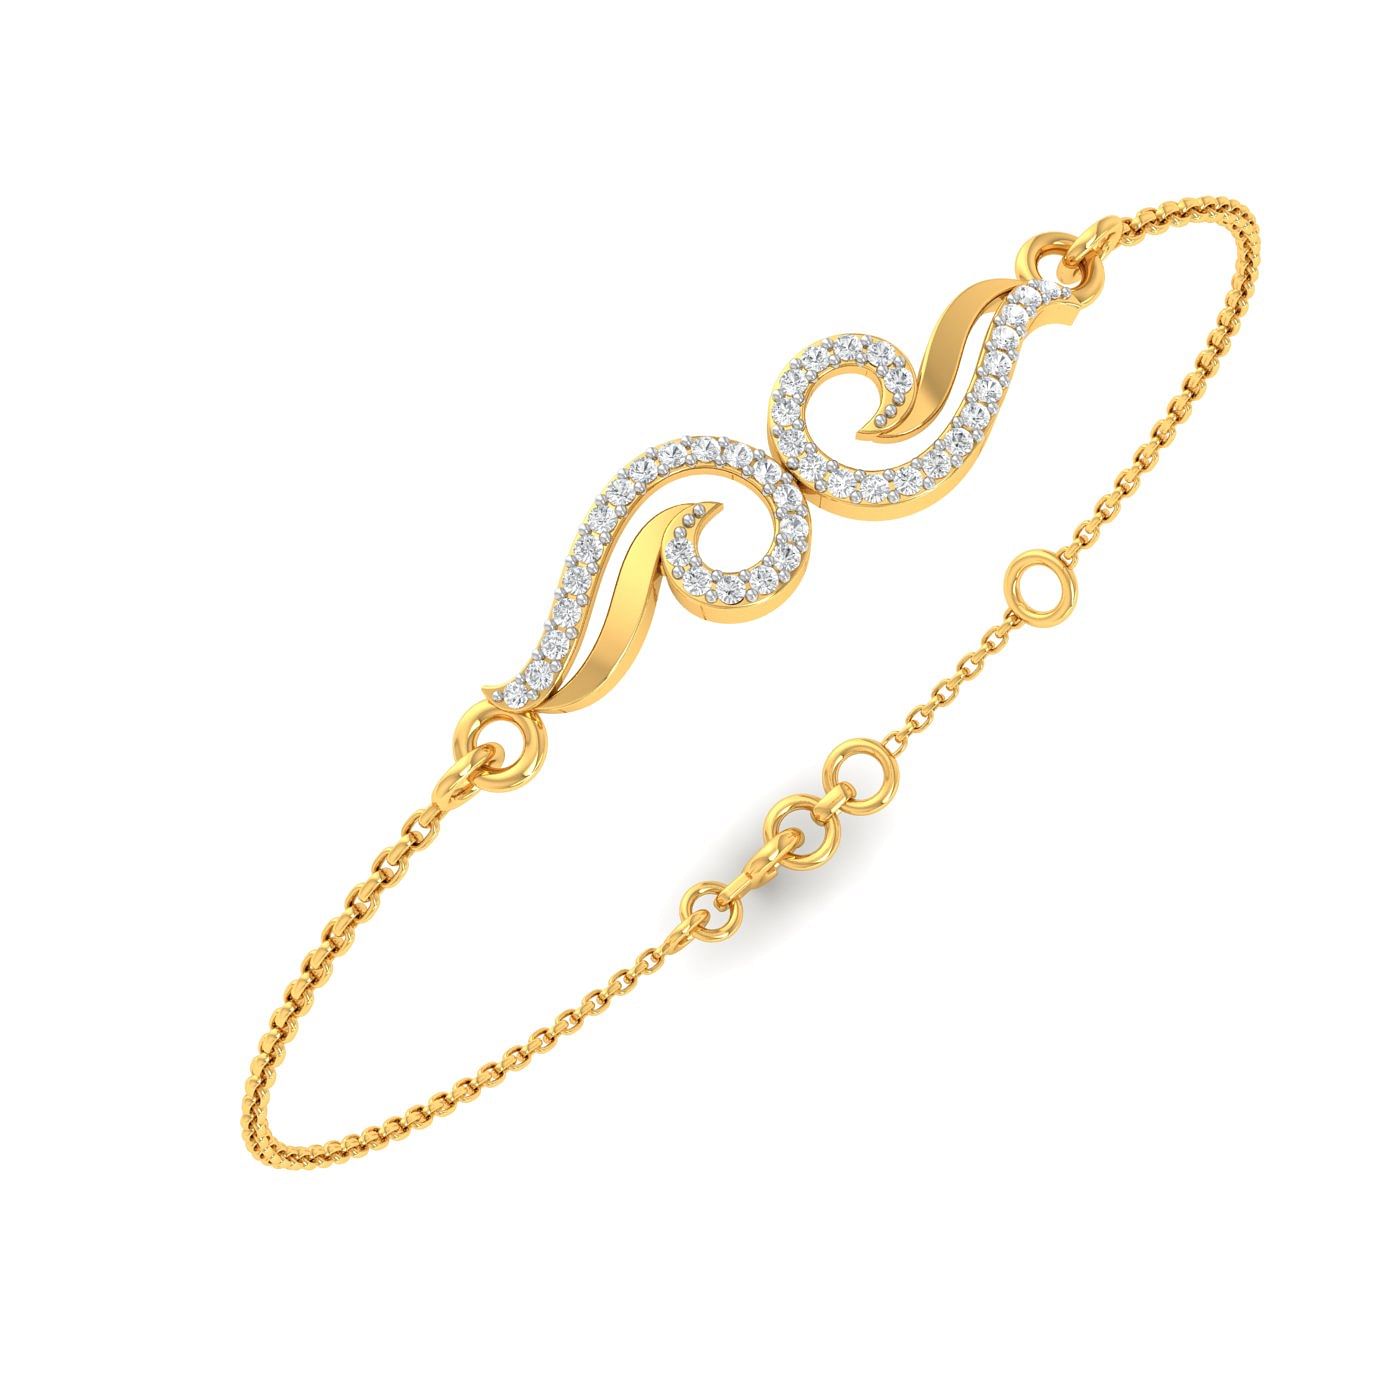 Unique Yellow Gold Mia Diamond Bracelet For Daily Wear